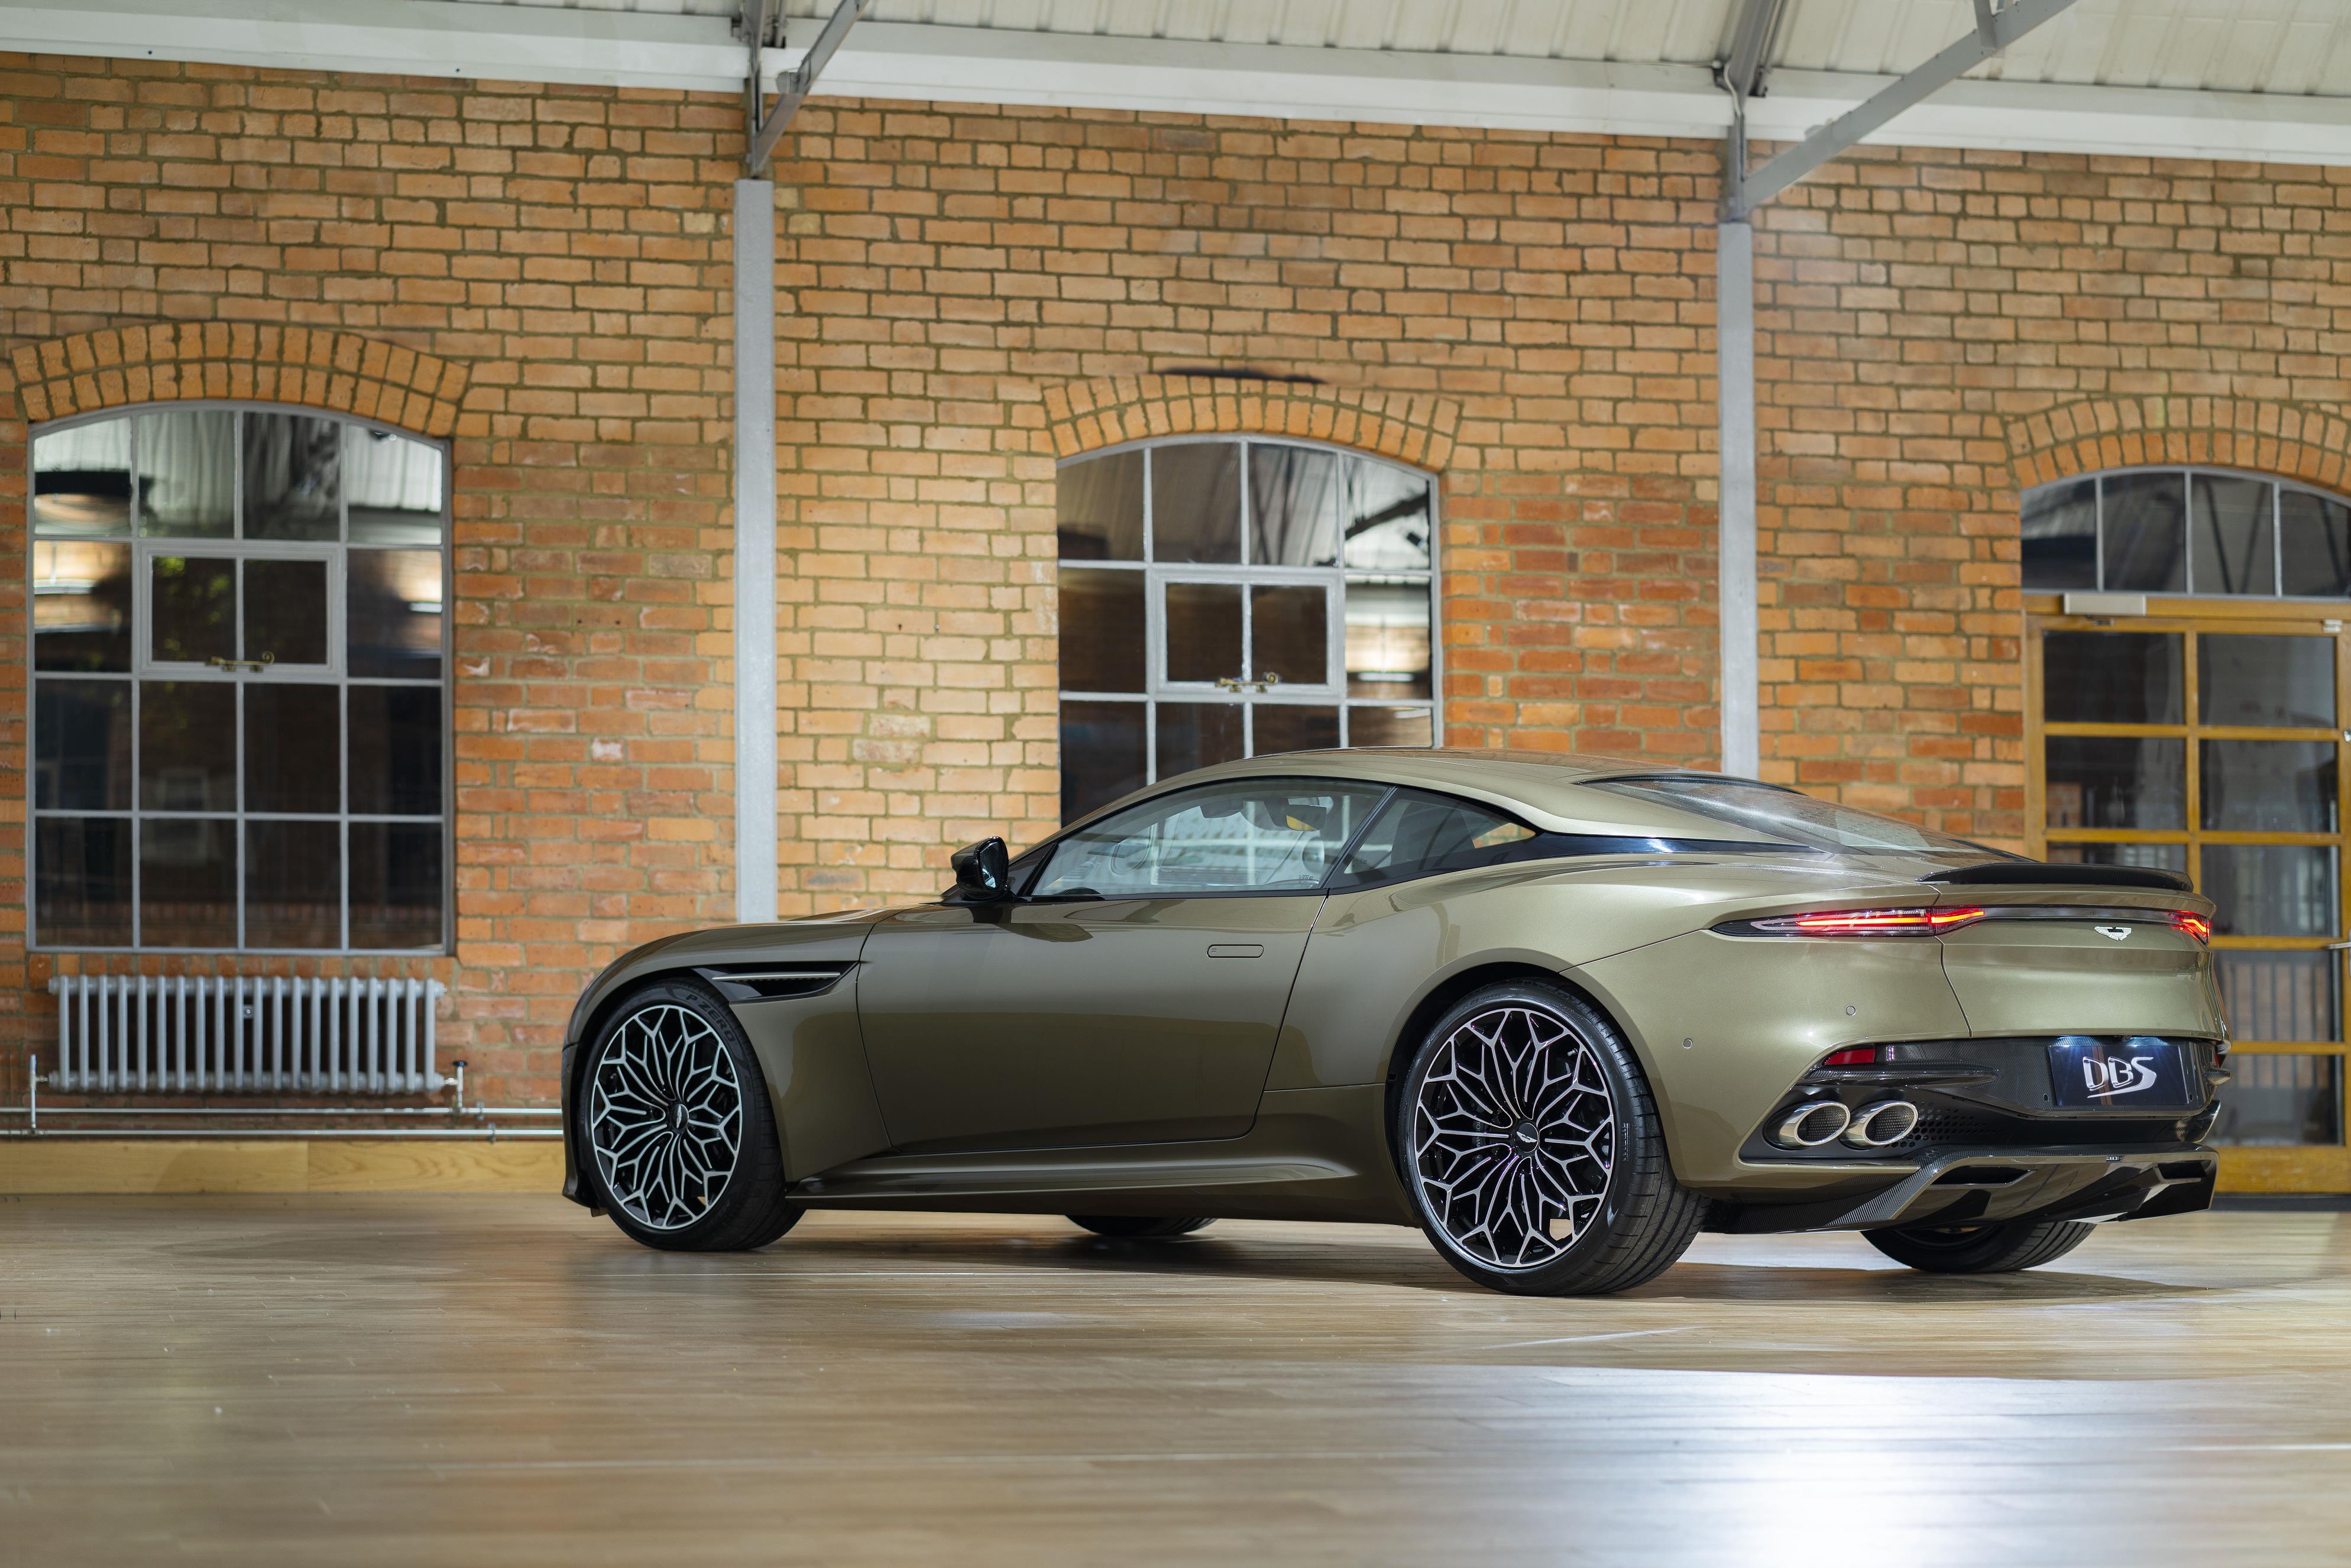 Aston Martin DBS Superleggera Rear Side